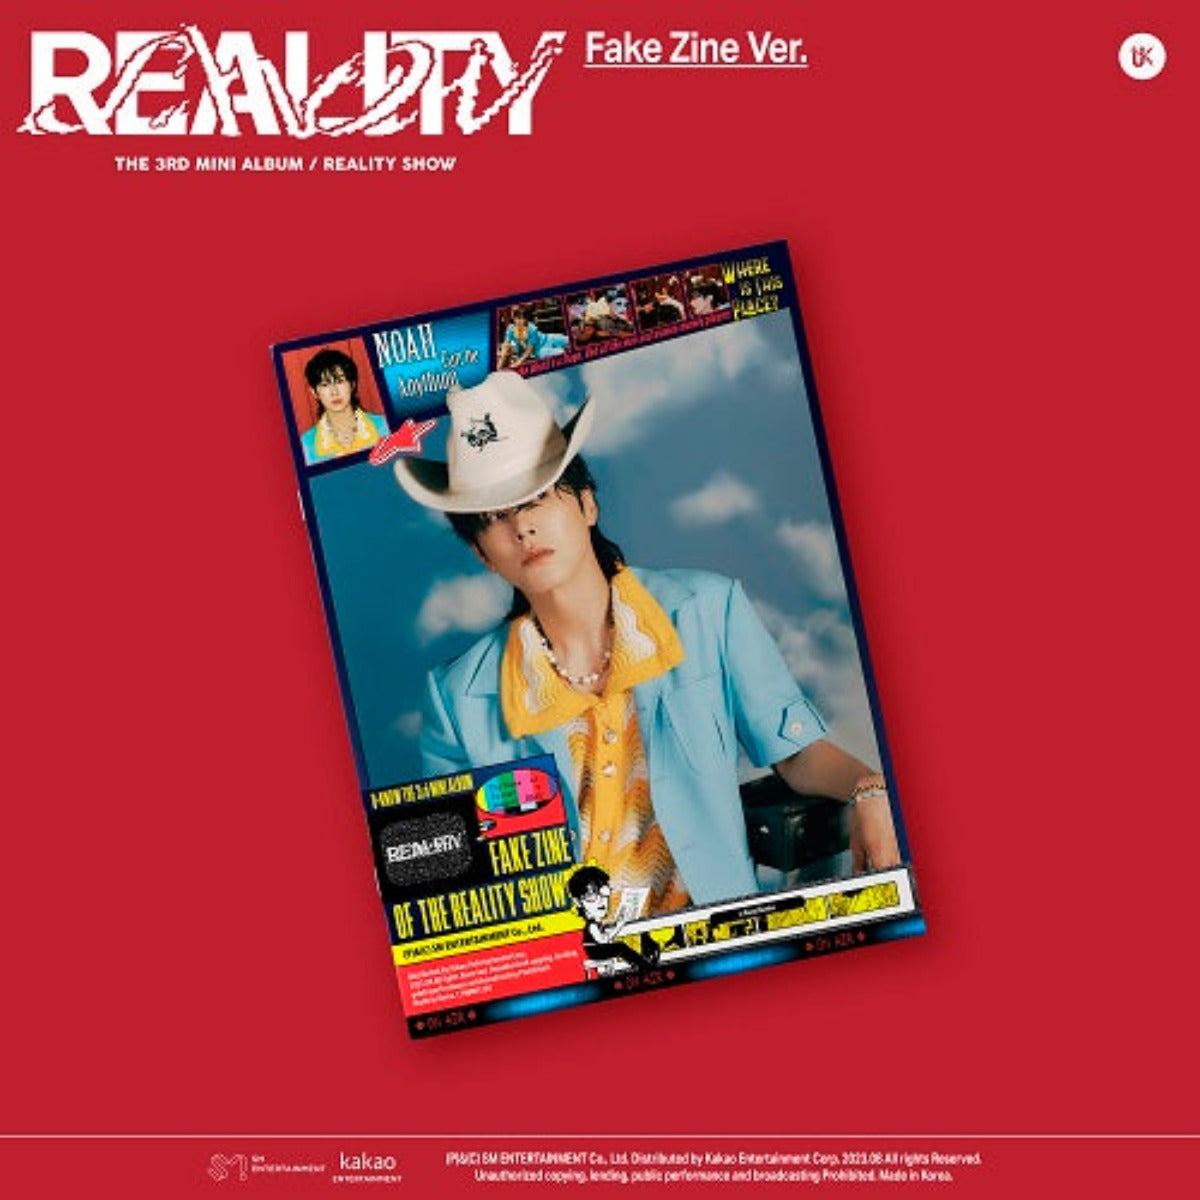 U-KNOW Yunho Mini Album Vol. 3 - Reality Show (Fake Zine Version)